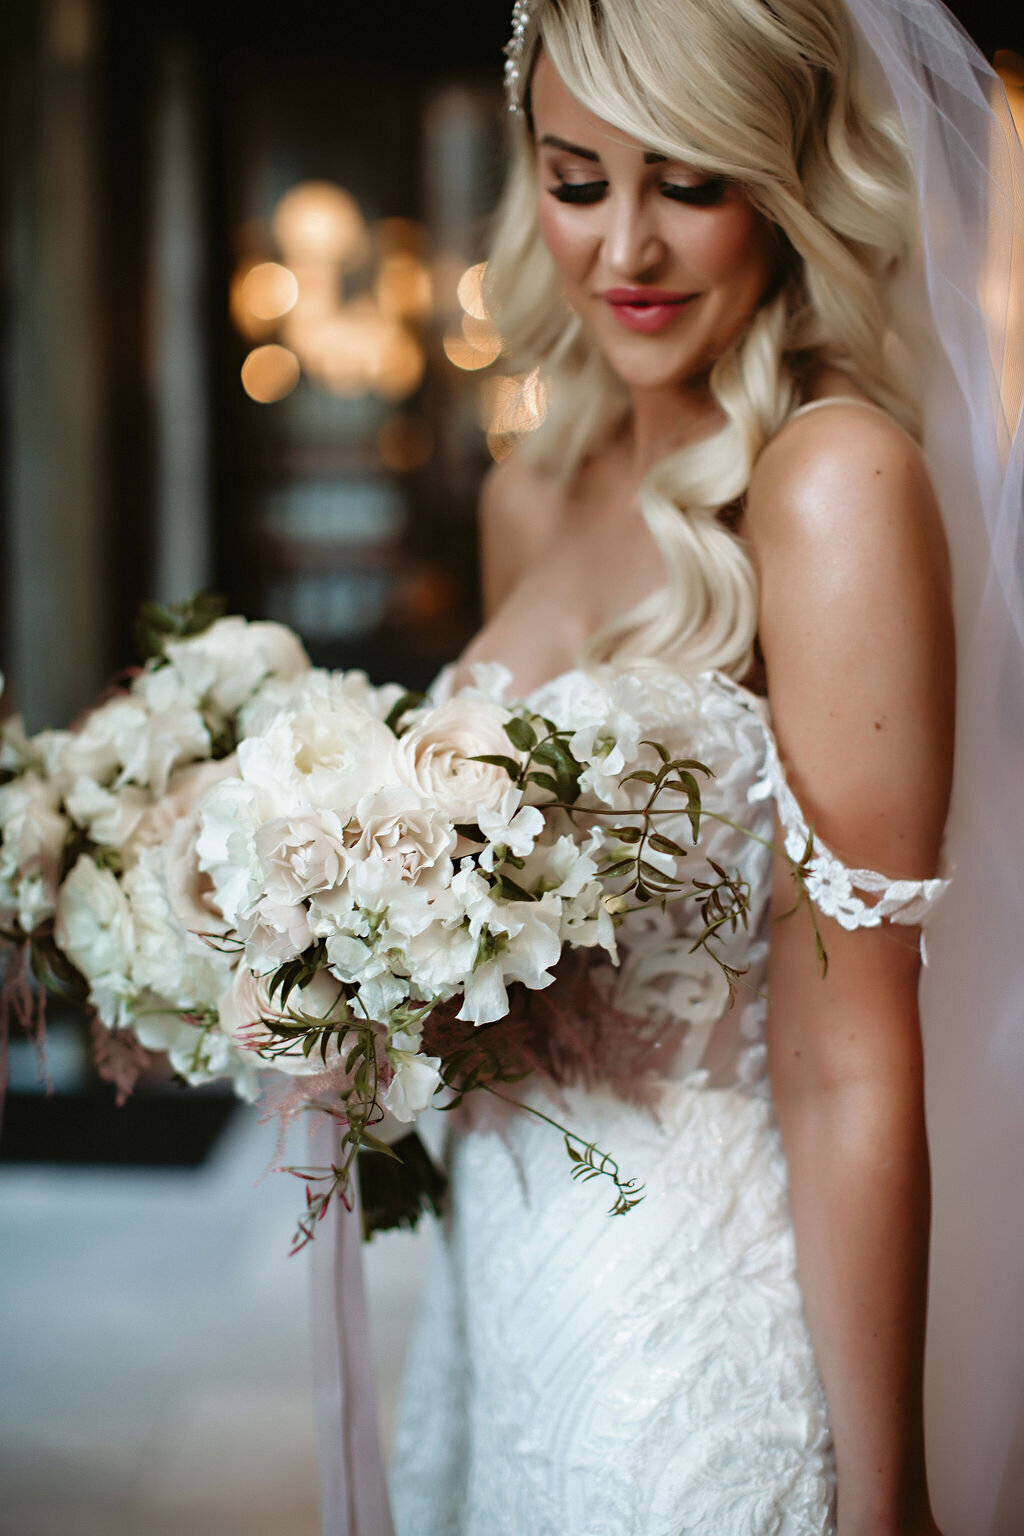 Stunning bride in her white Martina Liana wedding gown.